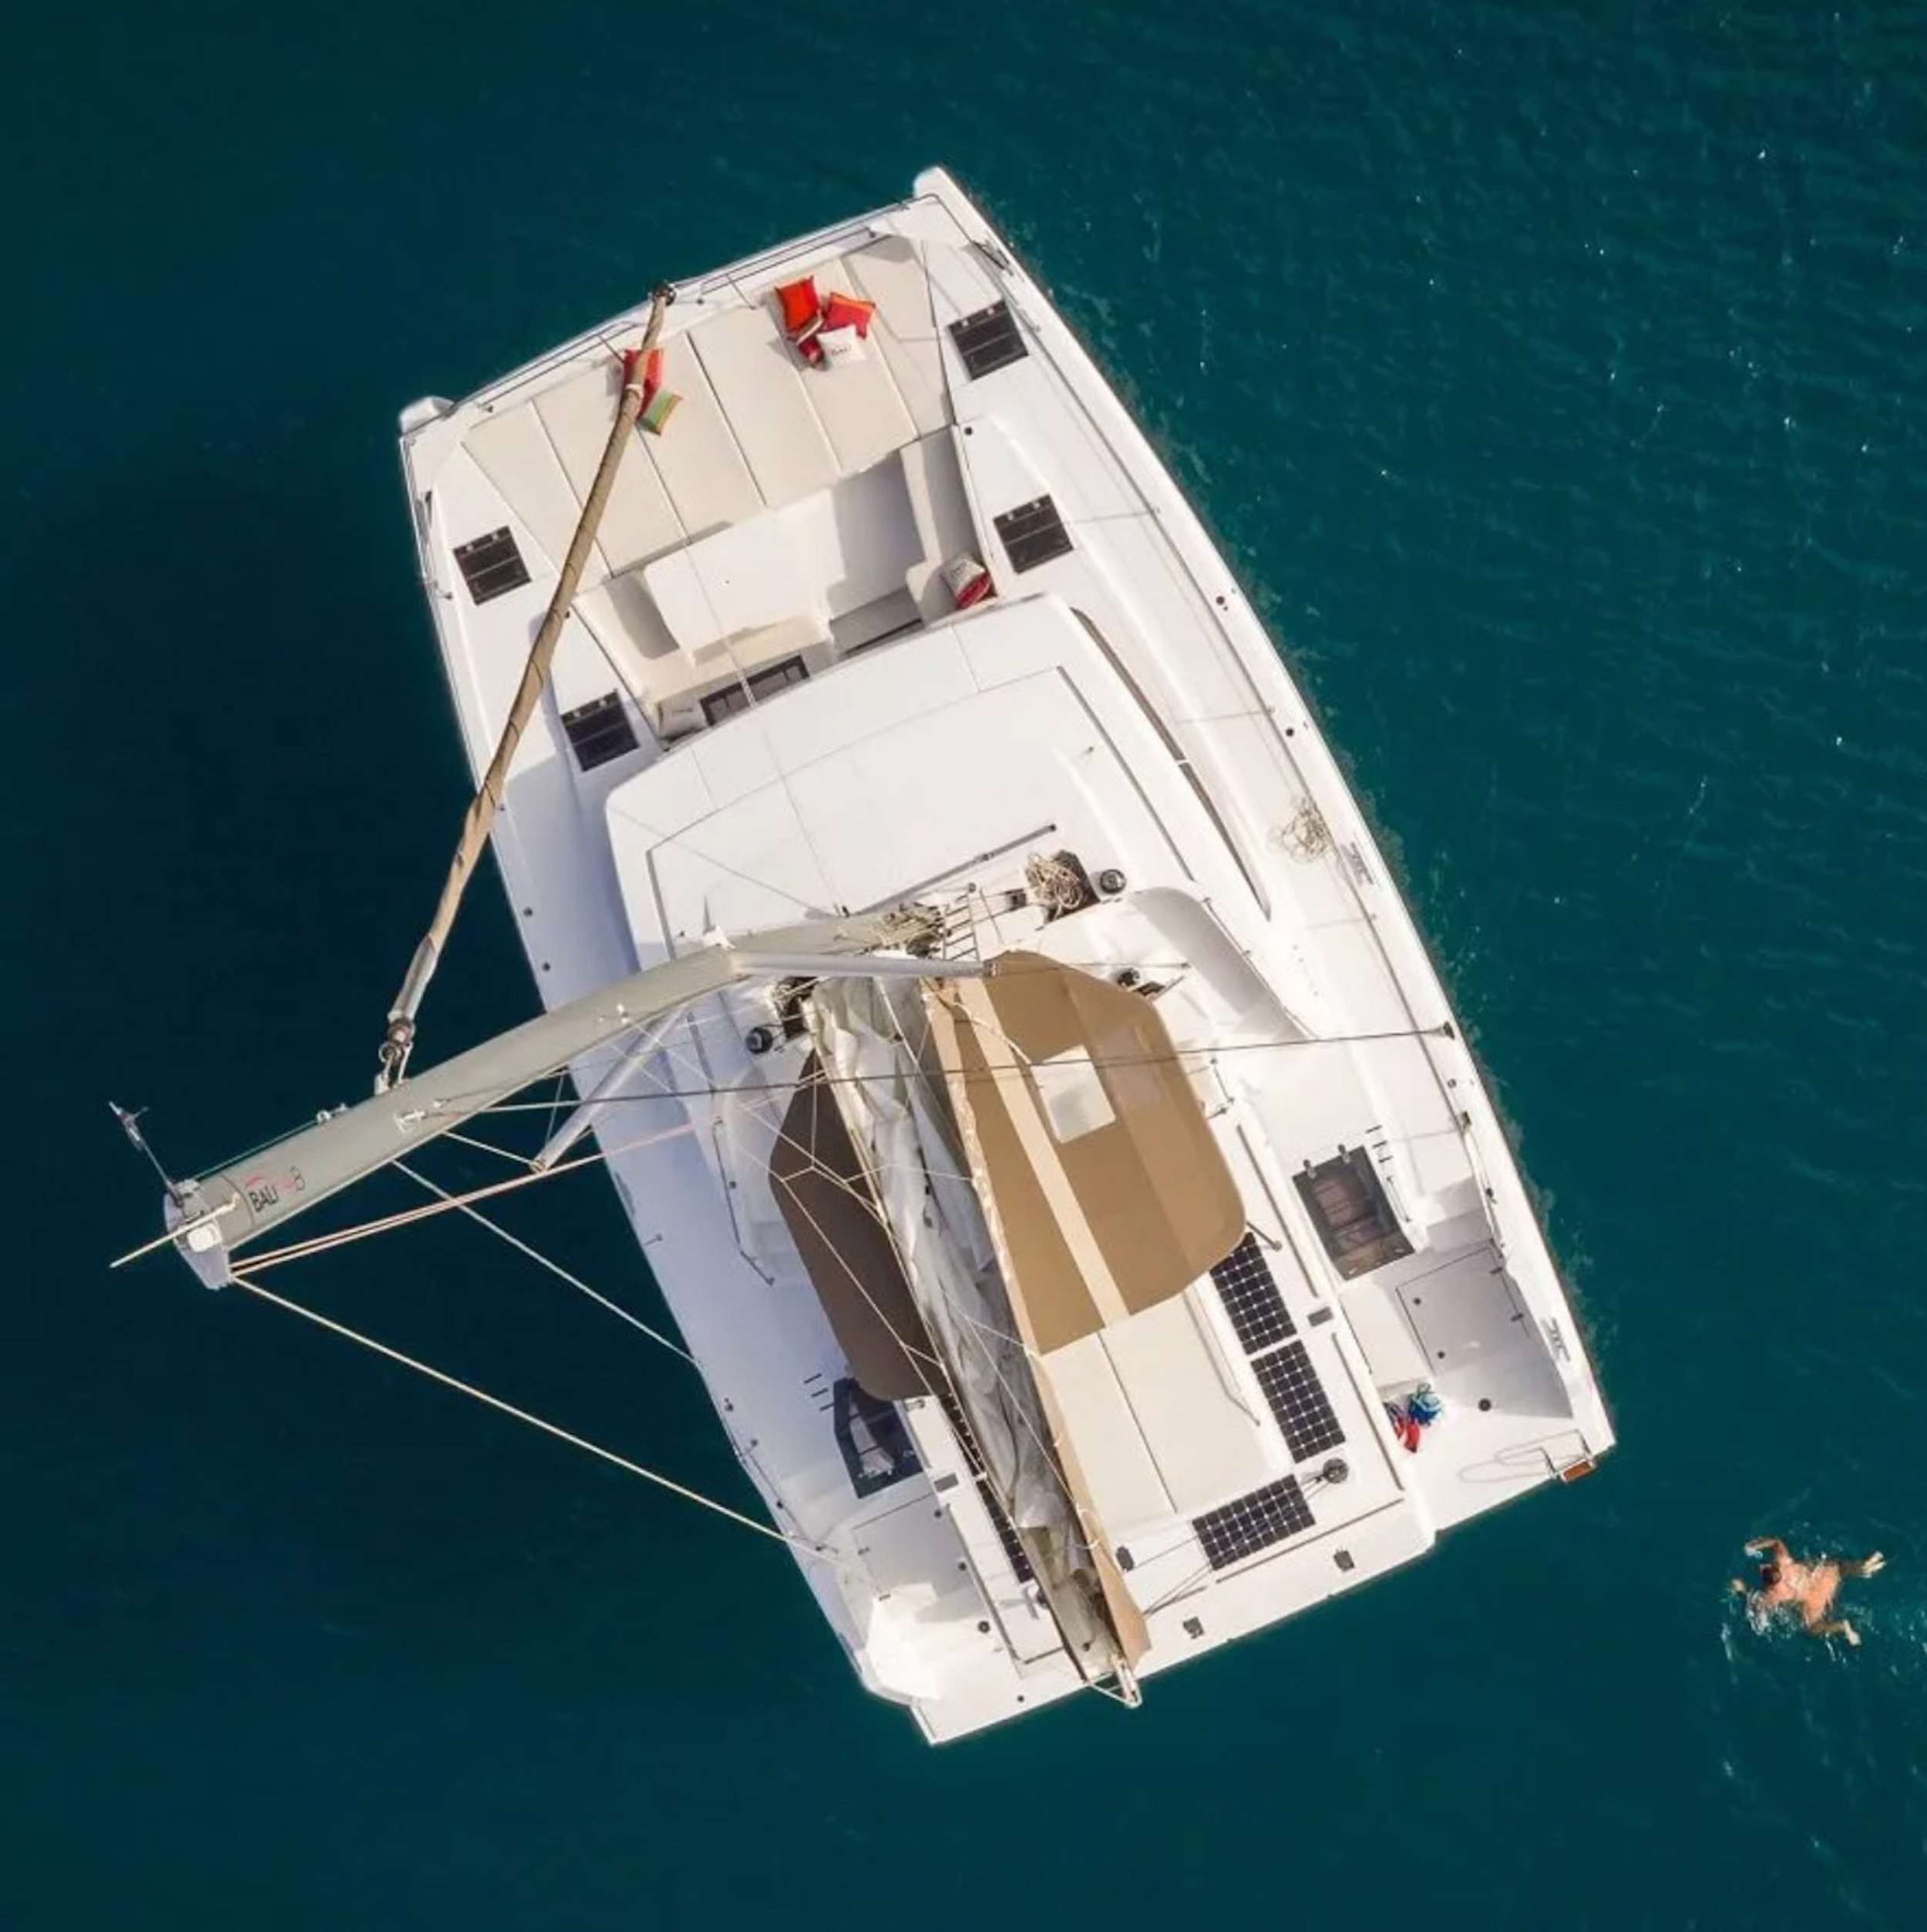 MEMENTO AMORI - Catamaran Charter Belize & Boat hire in Caribbean 3